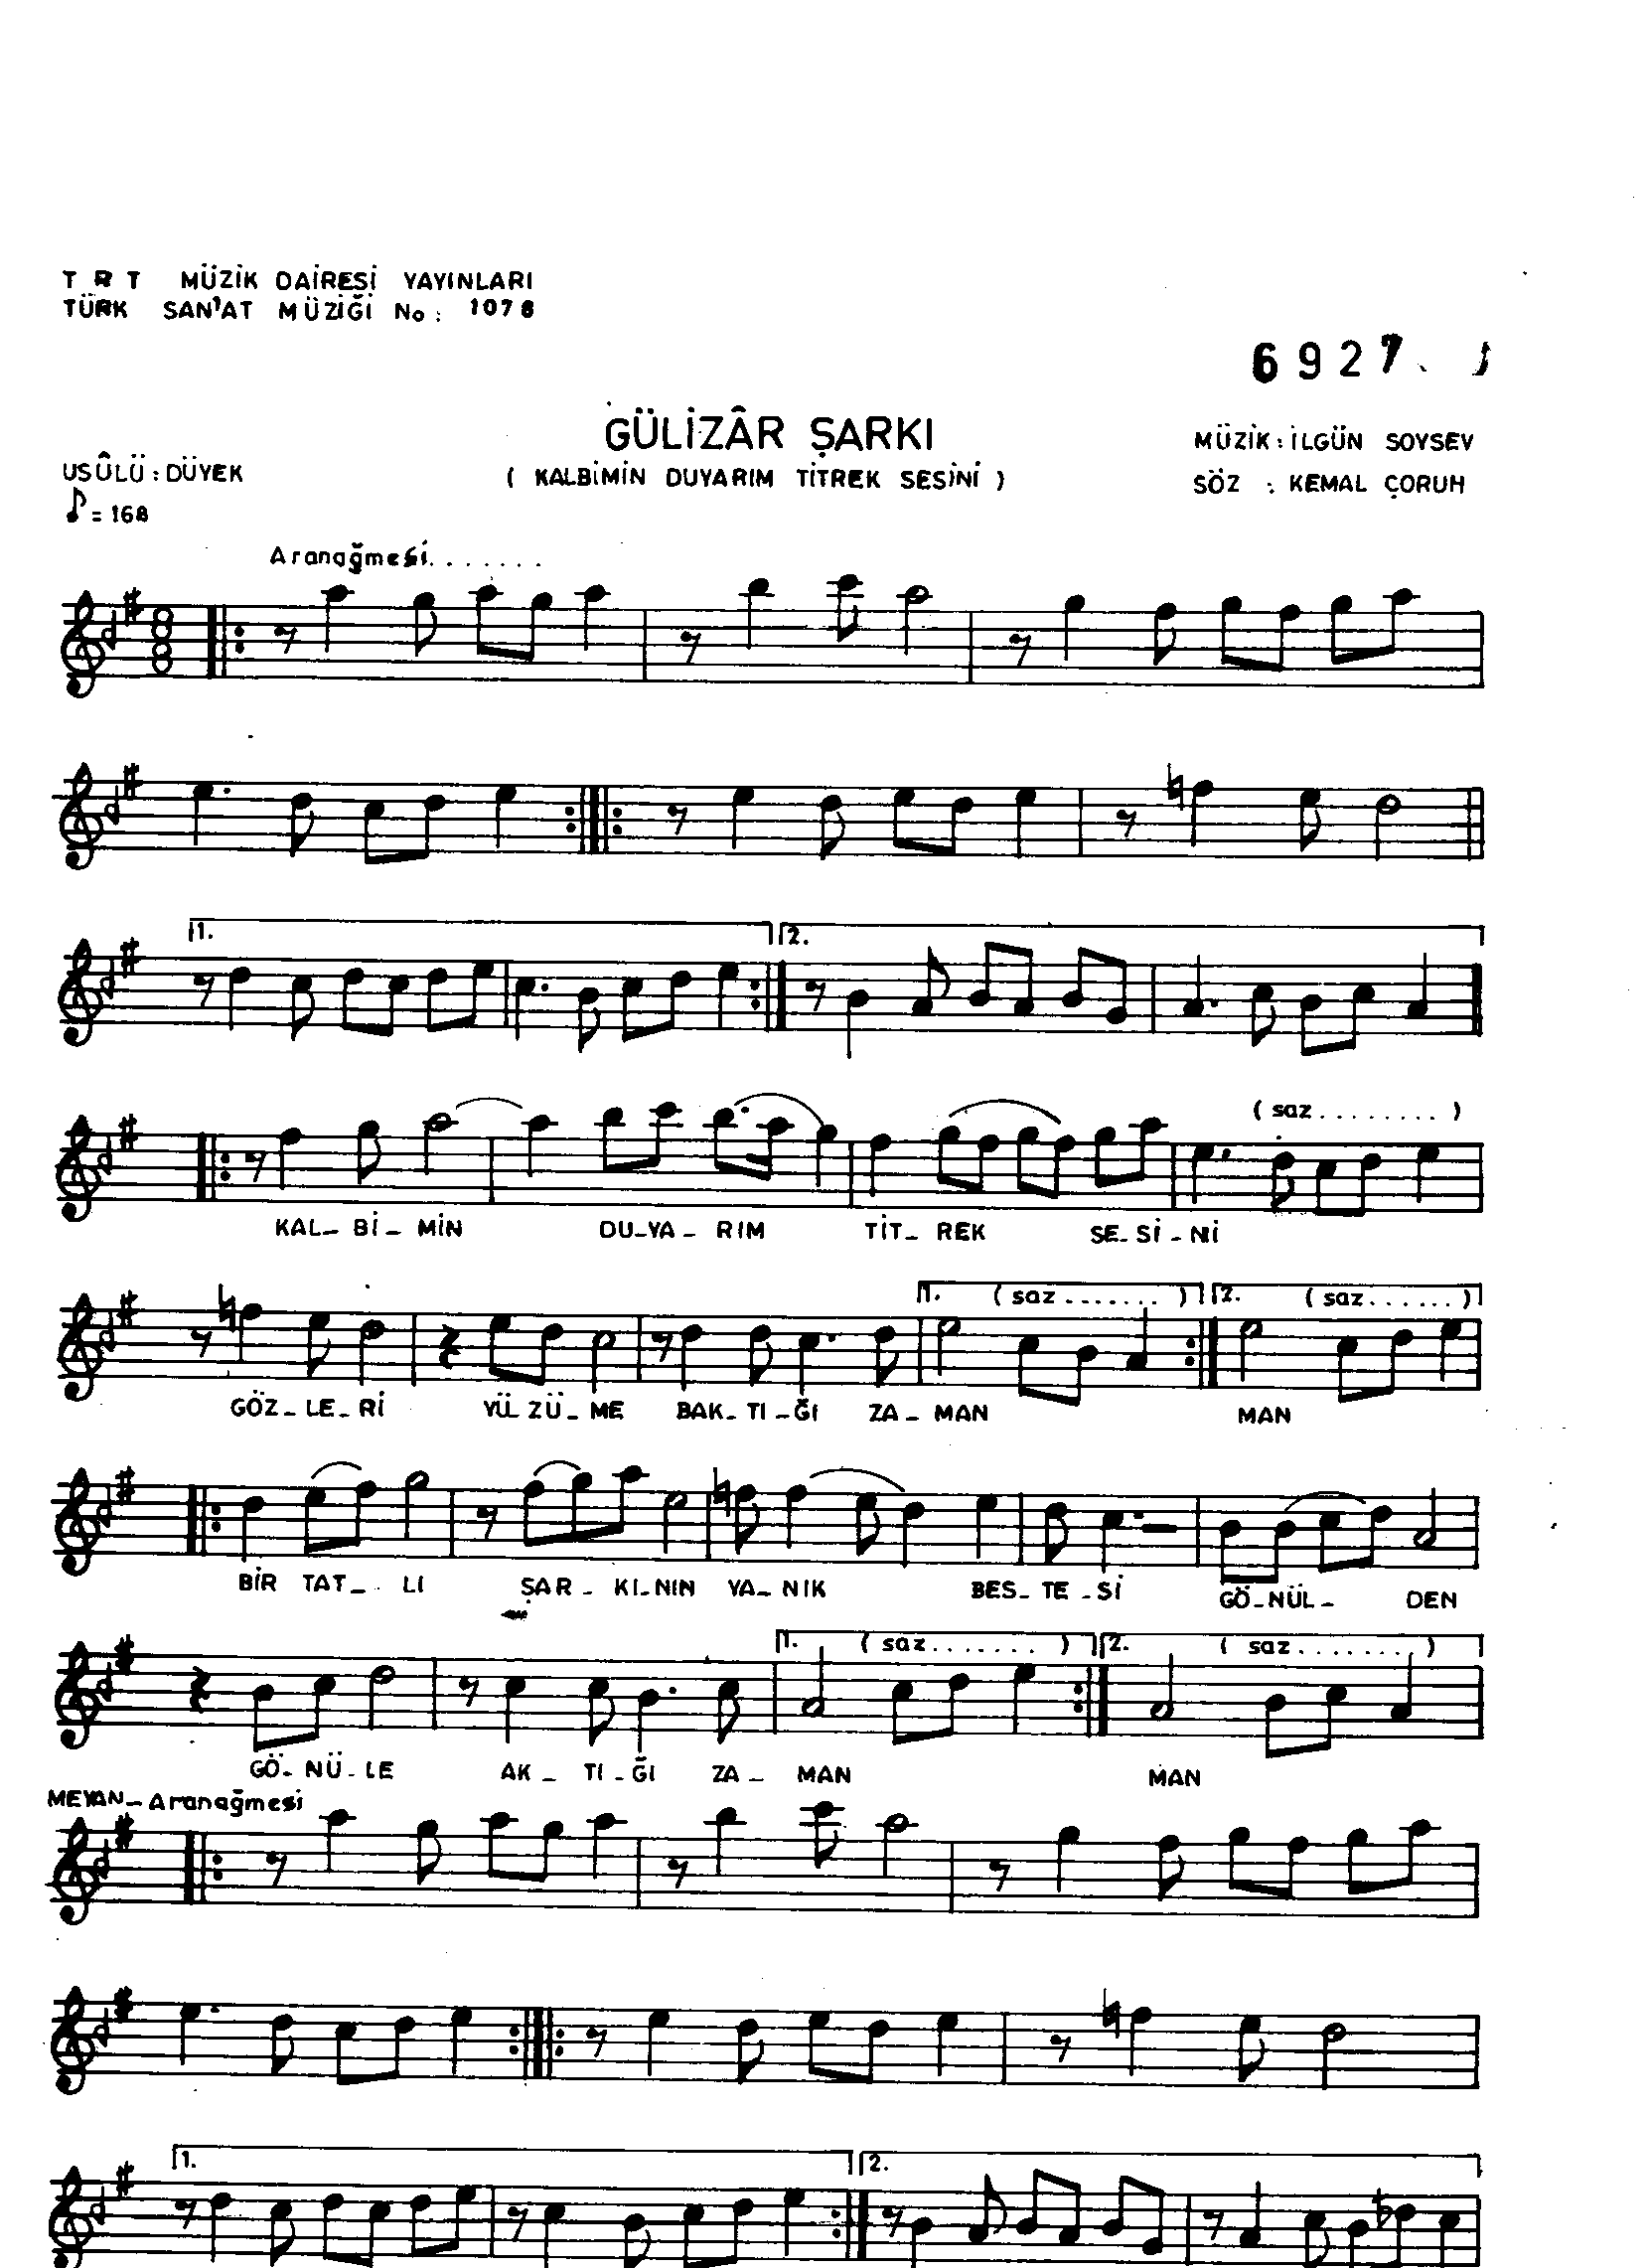 Gülizâr - Şarkı - İlgün Soysev - Sayfa 1